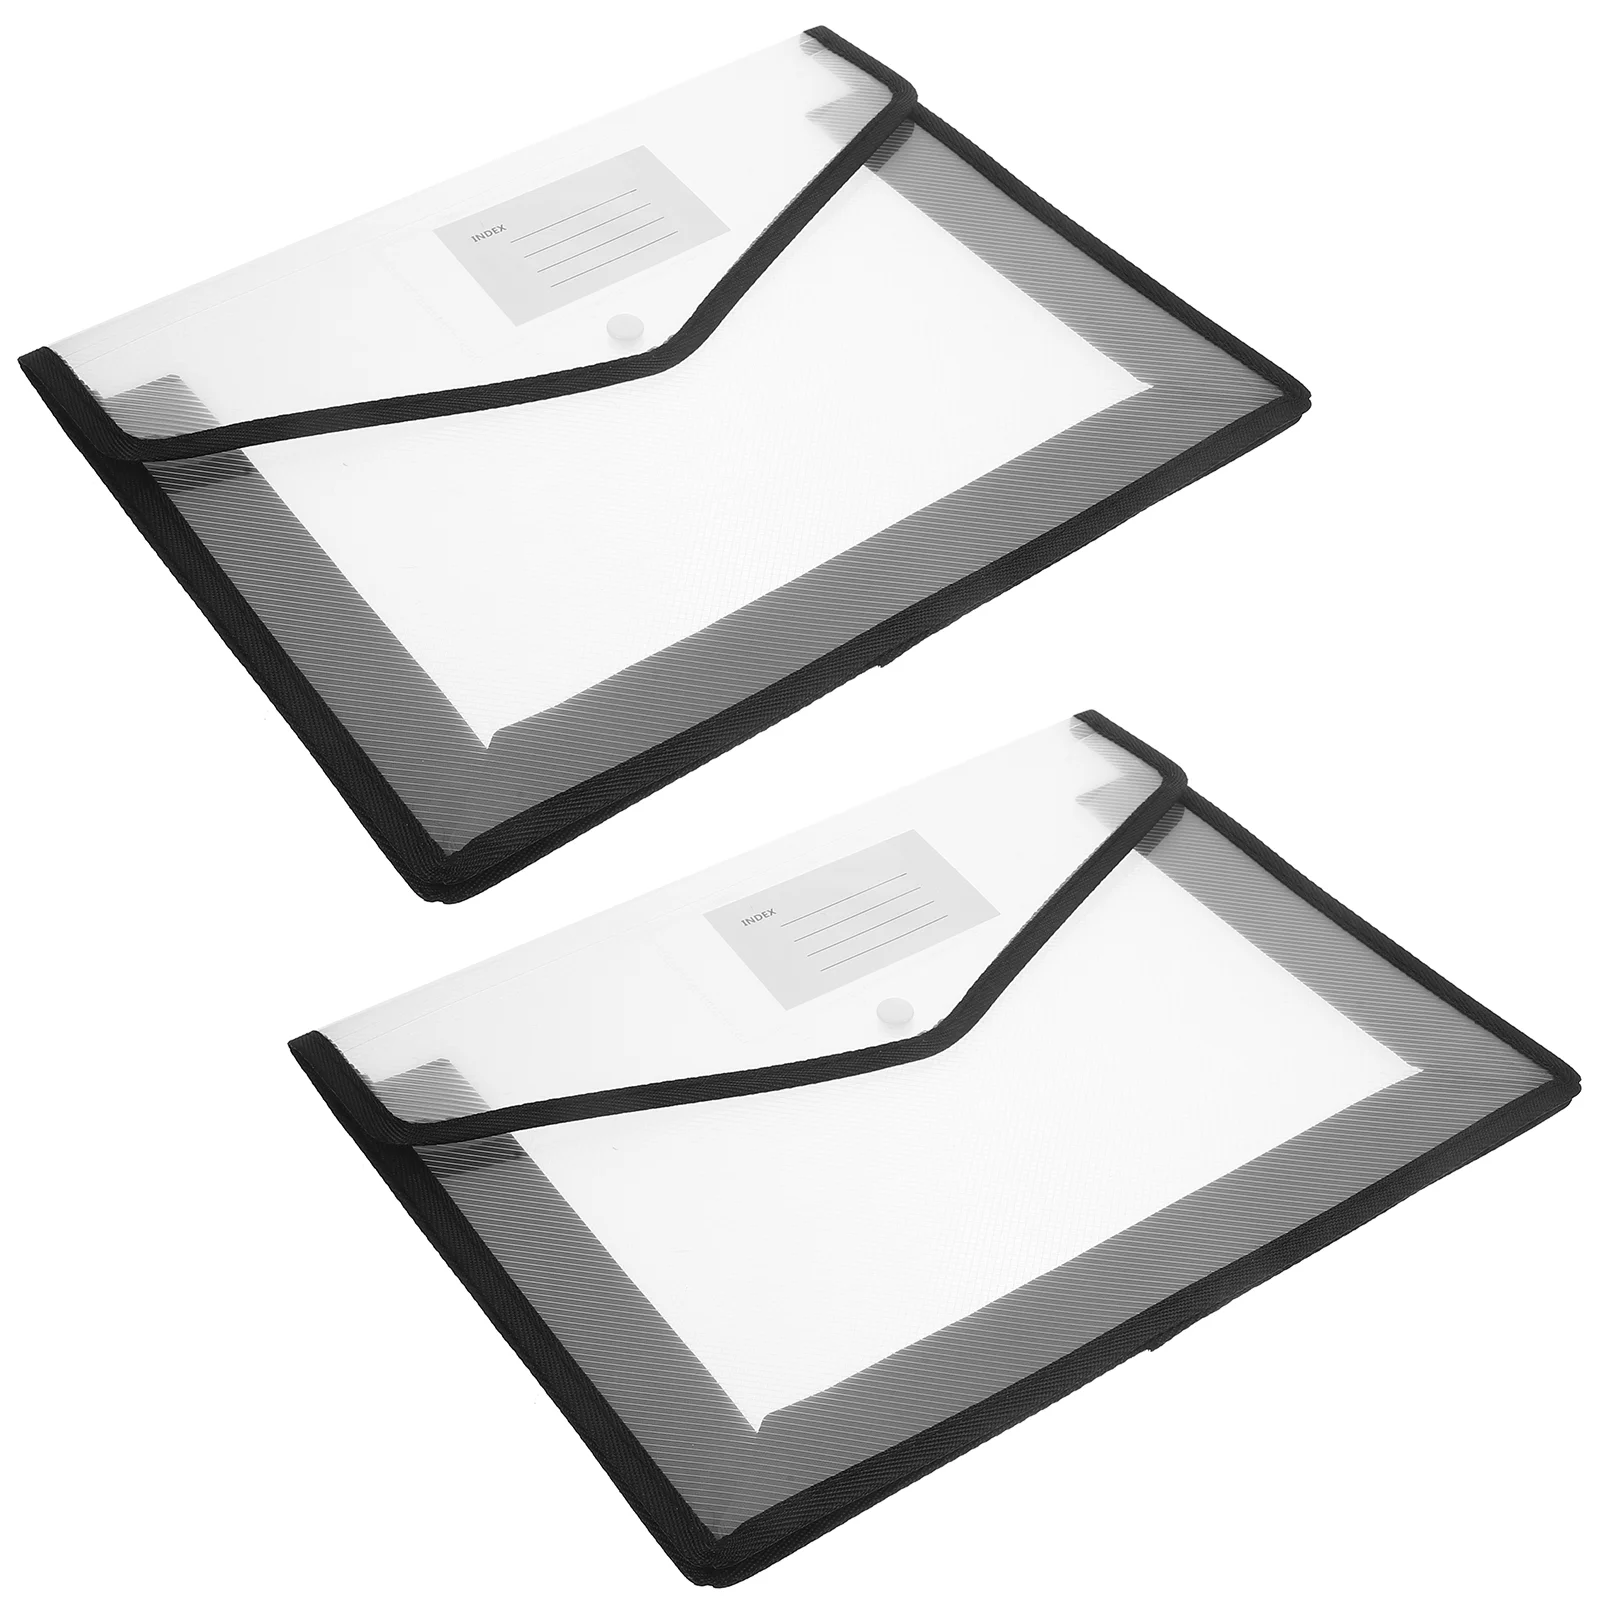 

2 Pcs A4pp Waterproof Snap Document Bag Documents Organizer Receipt Container File Folder Material Plastic Envelope